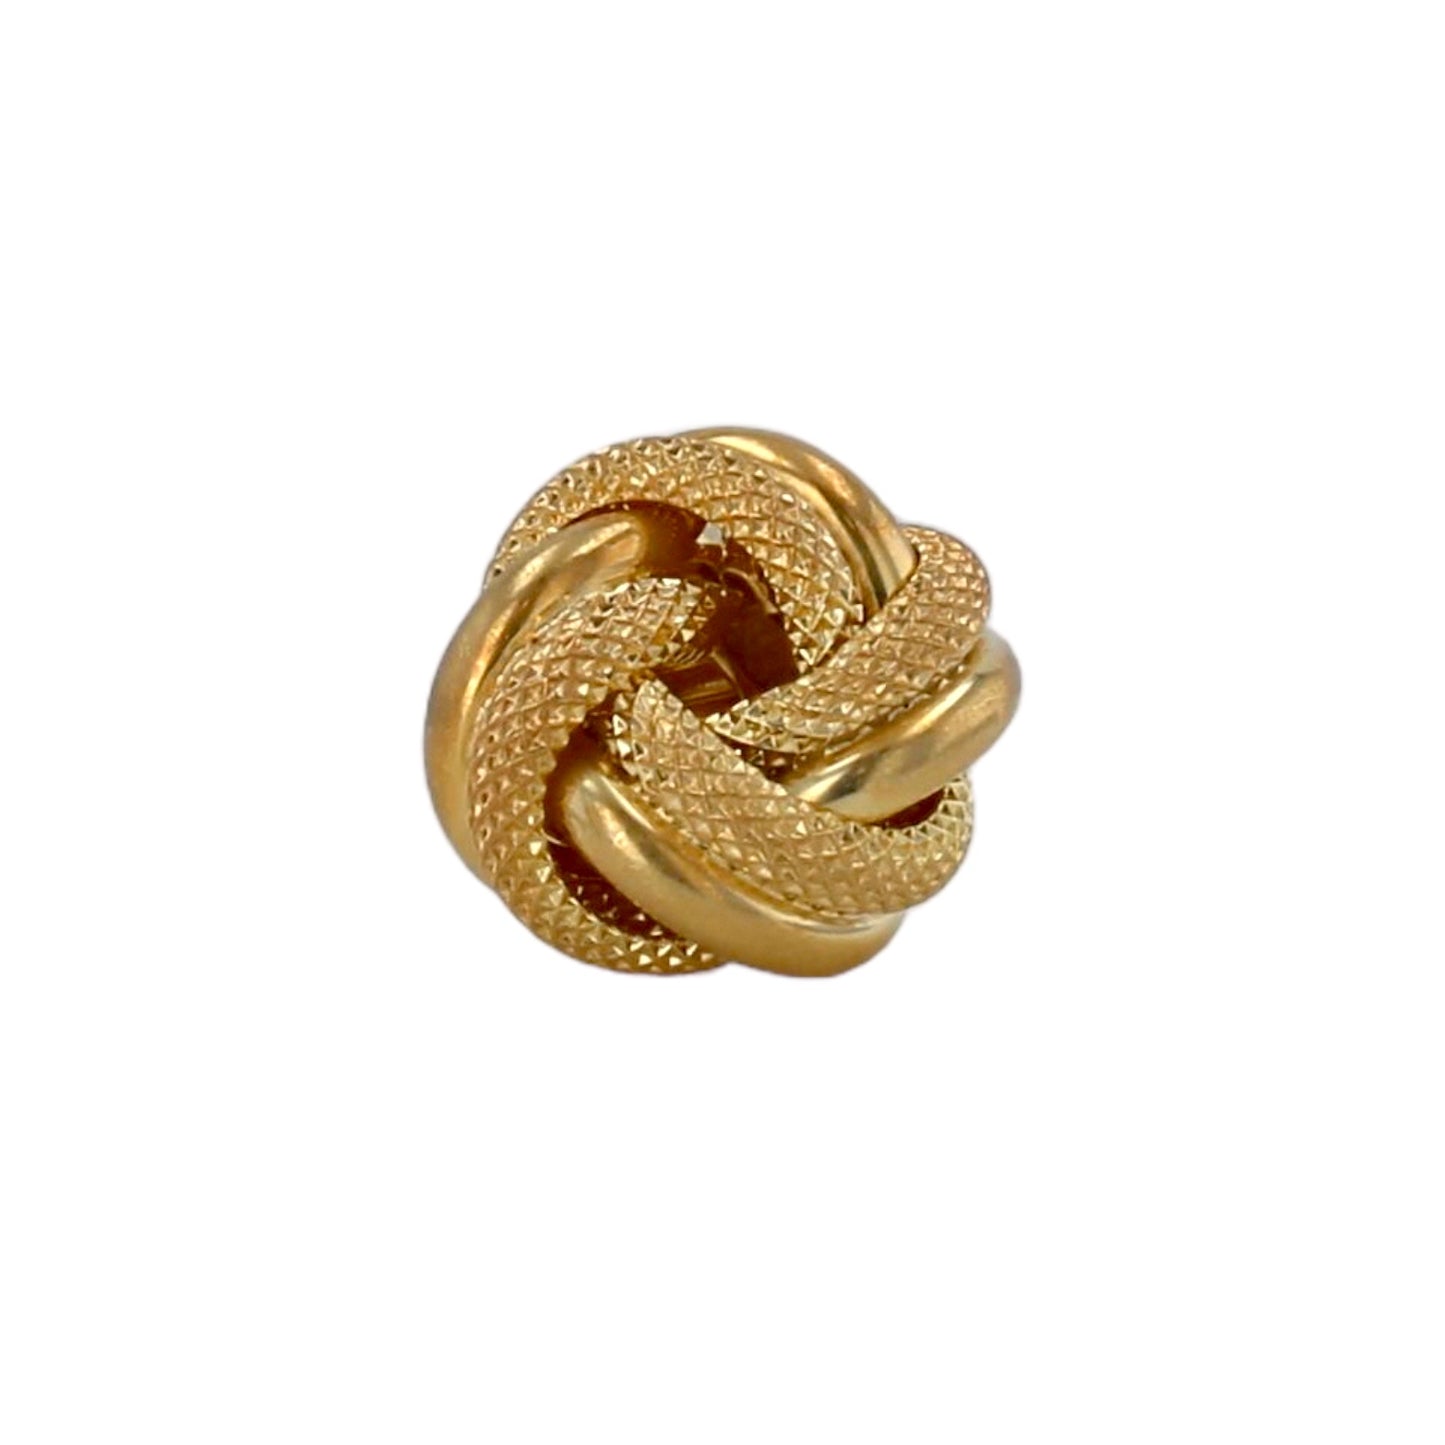 10K yellow medium gold love knot studs earring-226229